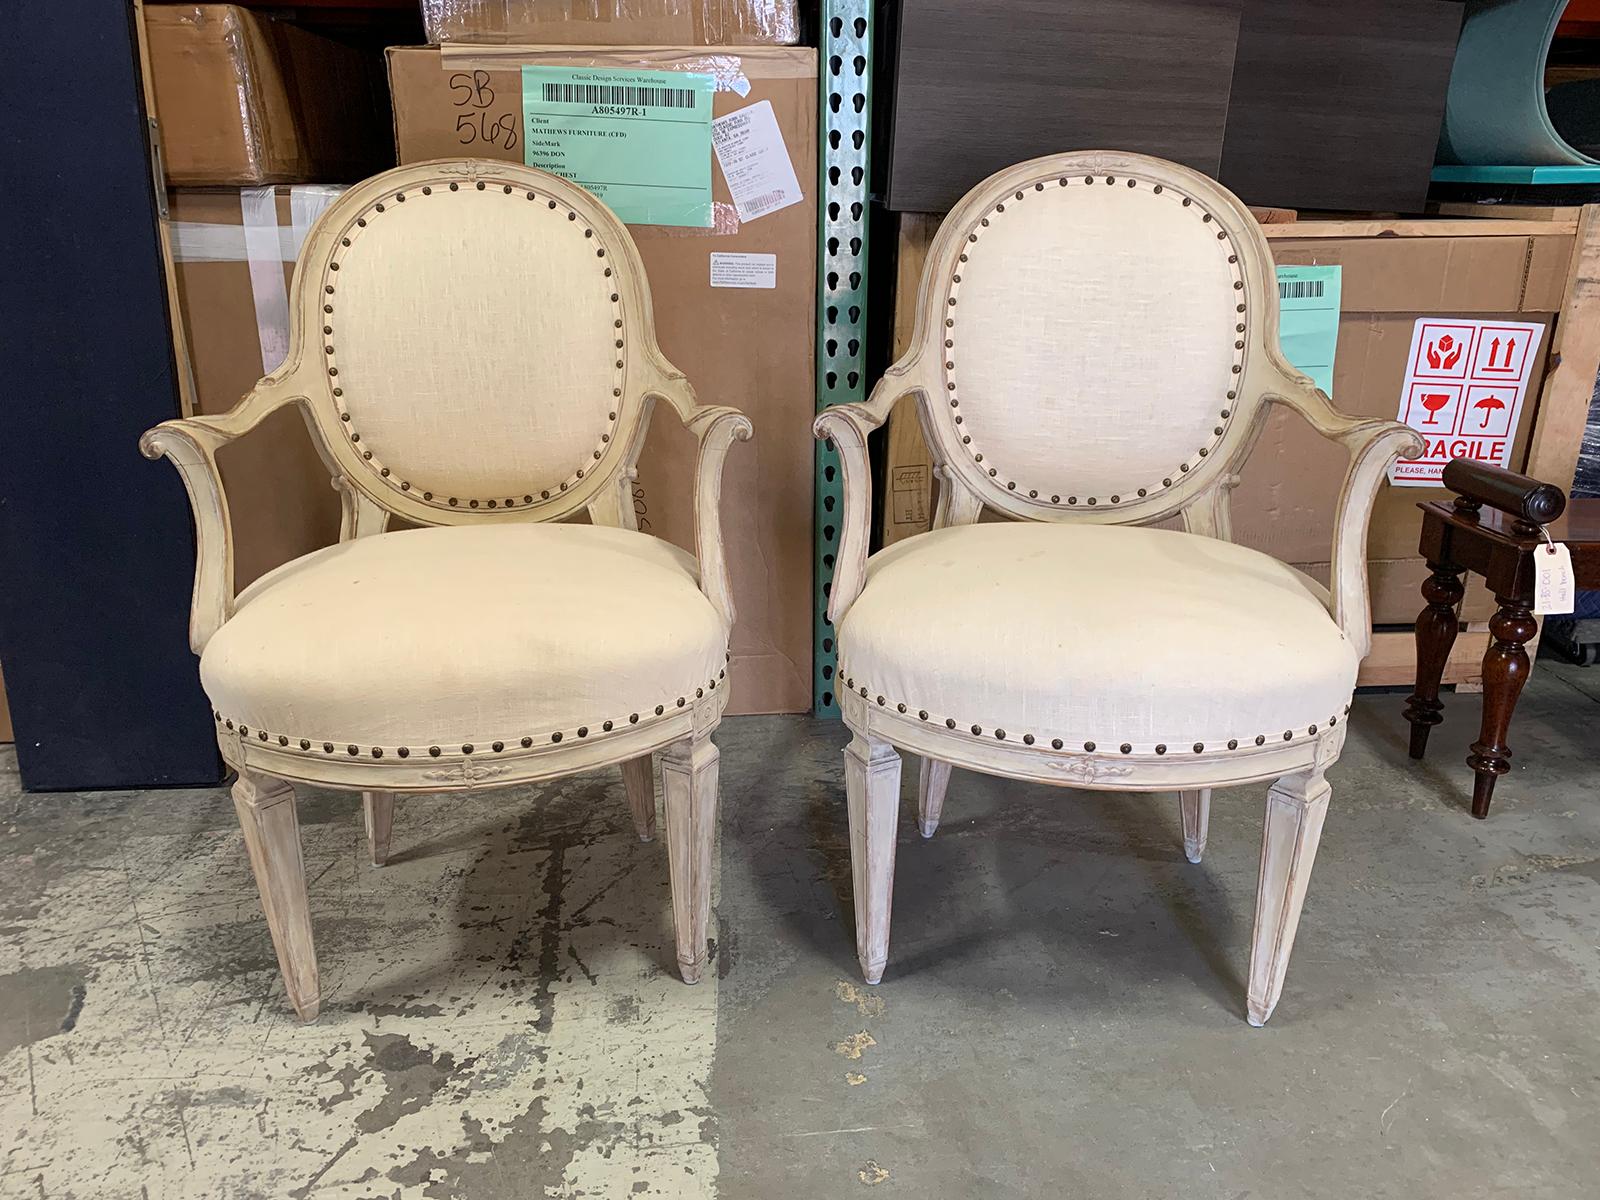 Pair of 20th century Italian style polychrome armchairs
Measures: 24.5